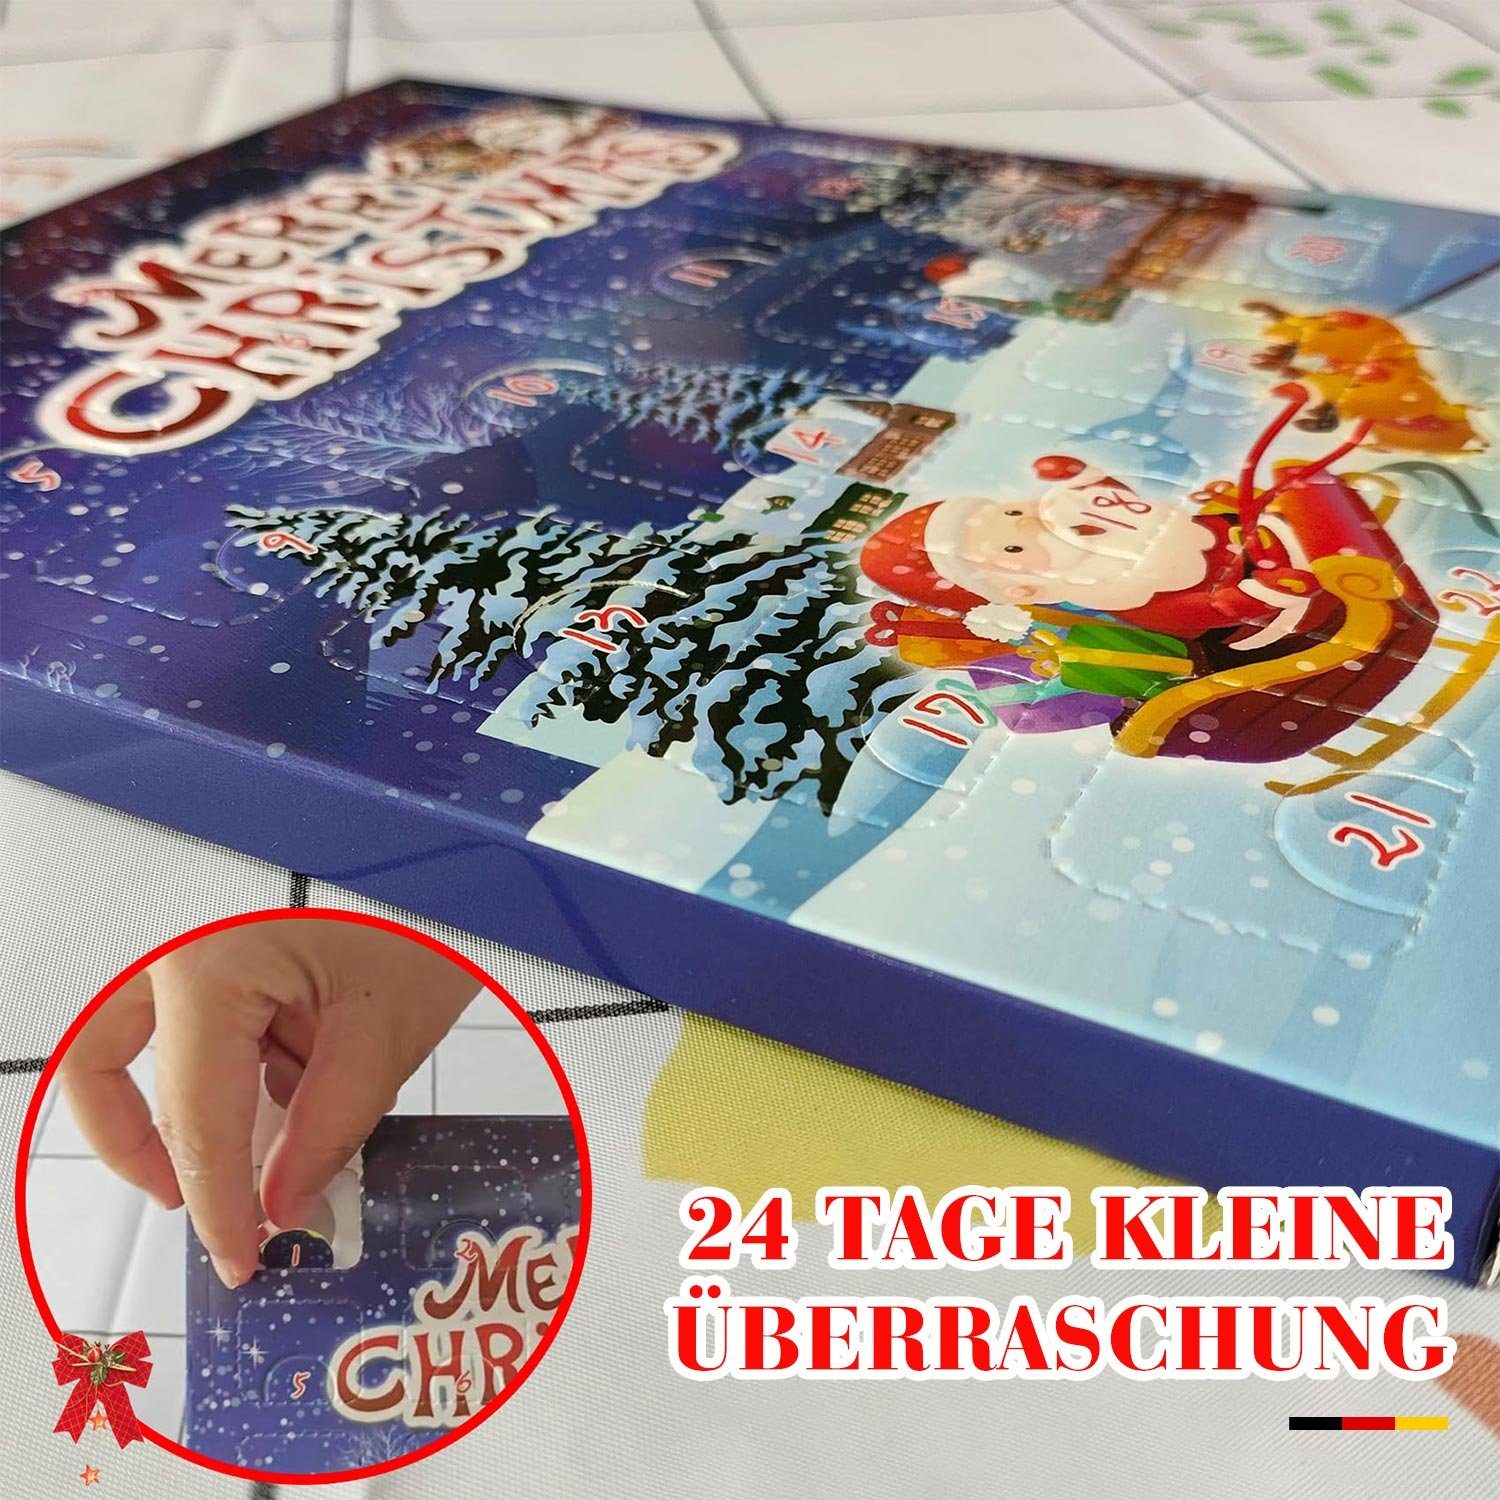 MAGICSHE Rot Füllprozess Armband Anhänger Armband DIY Sets, Adventskalender Weihnachtskalender 24